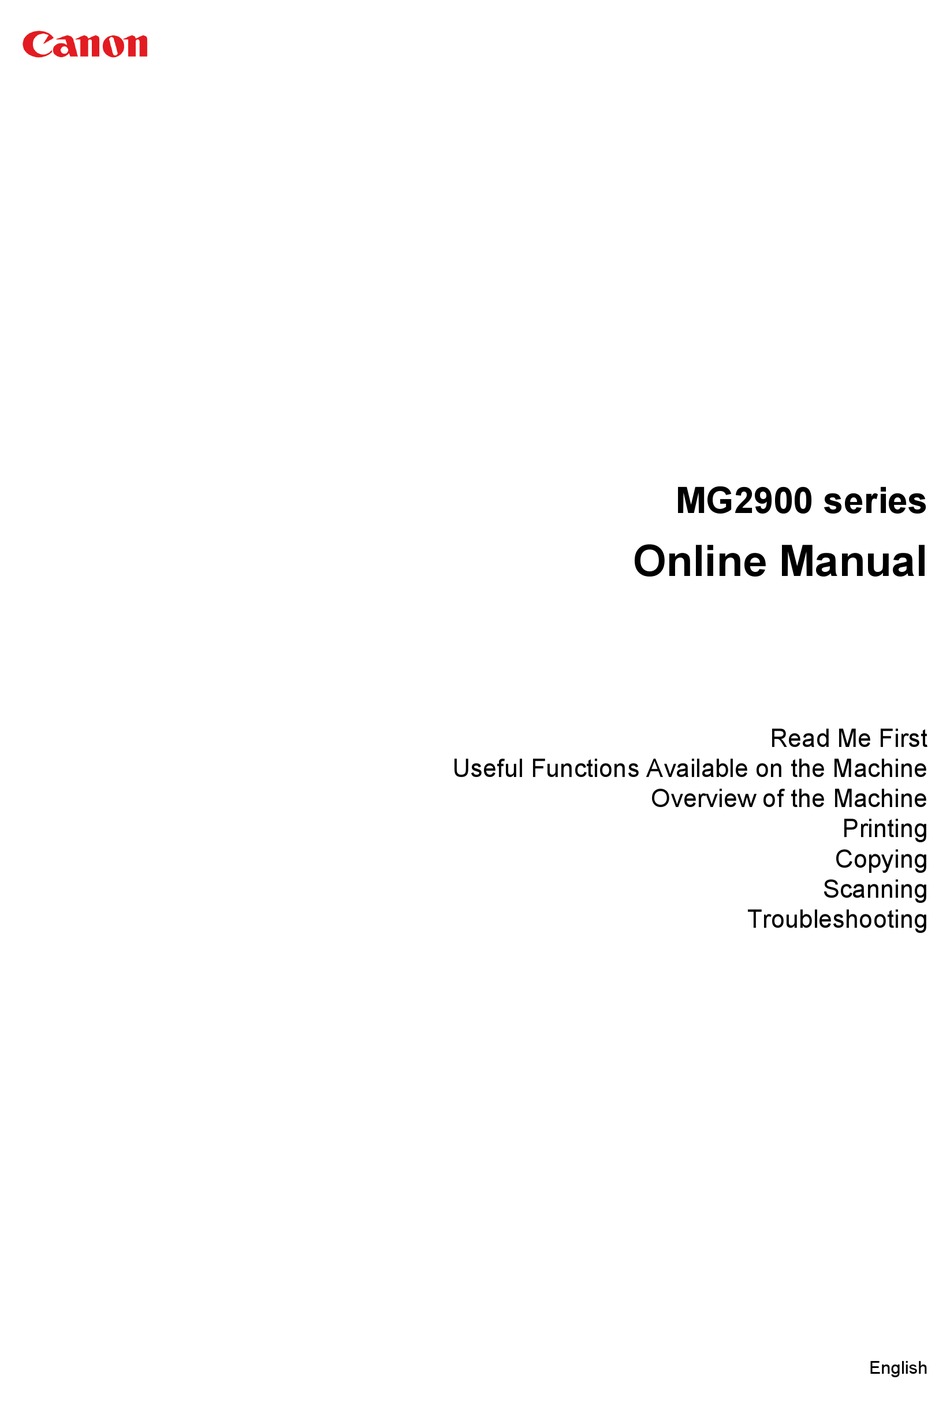 CANON MG2900 SERIES MANUAL Pdf Download | ManualsLib